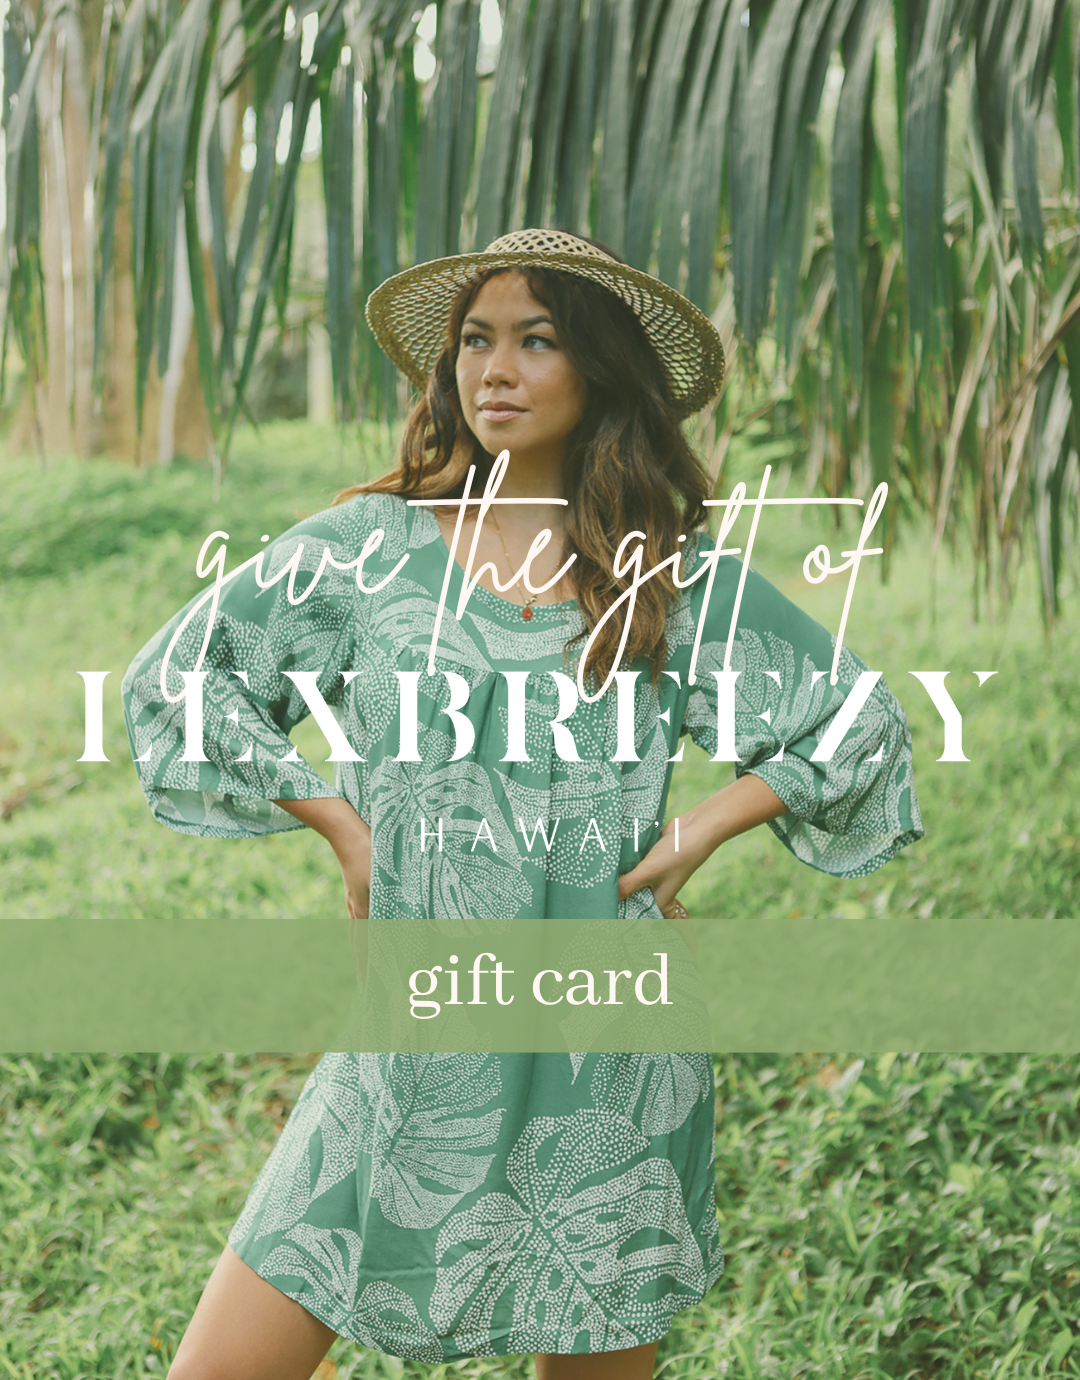 Lexbreezy Hawai'i Gift Card, Gift Cards